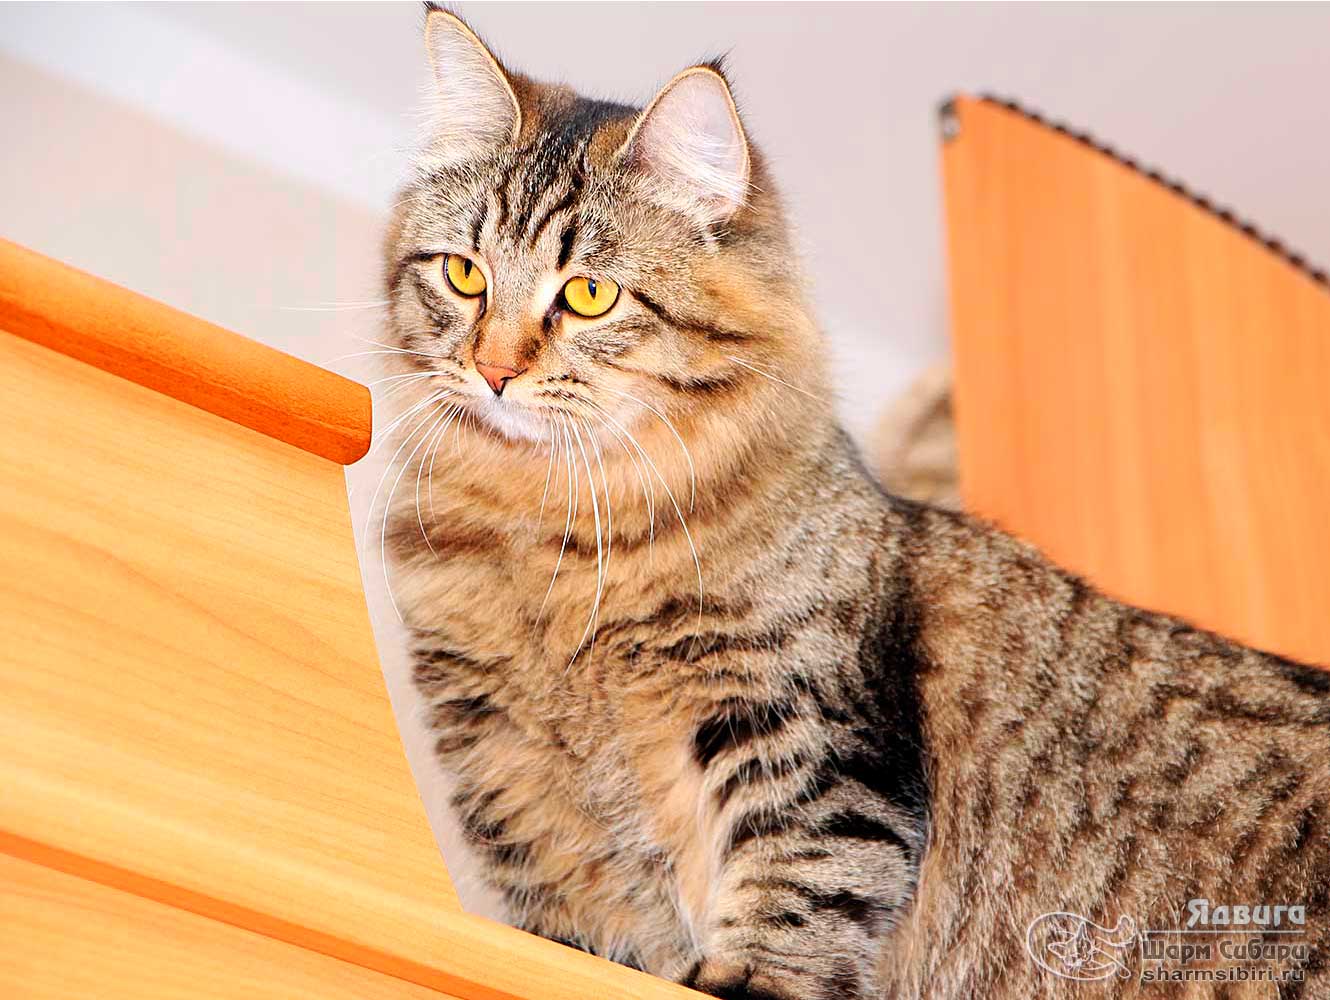 Сибирская кошка Ядвига Шарм Сибири